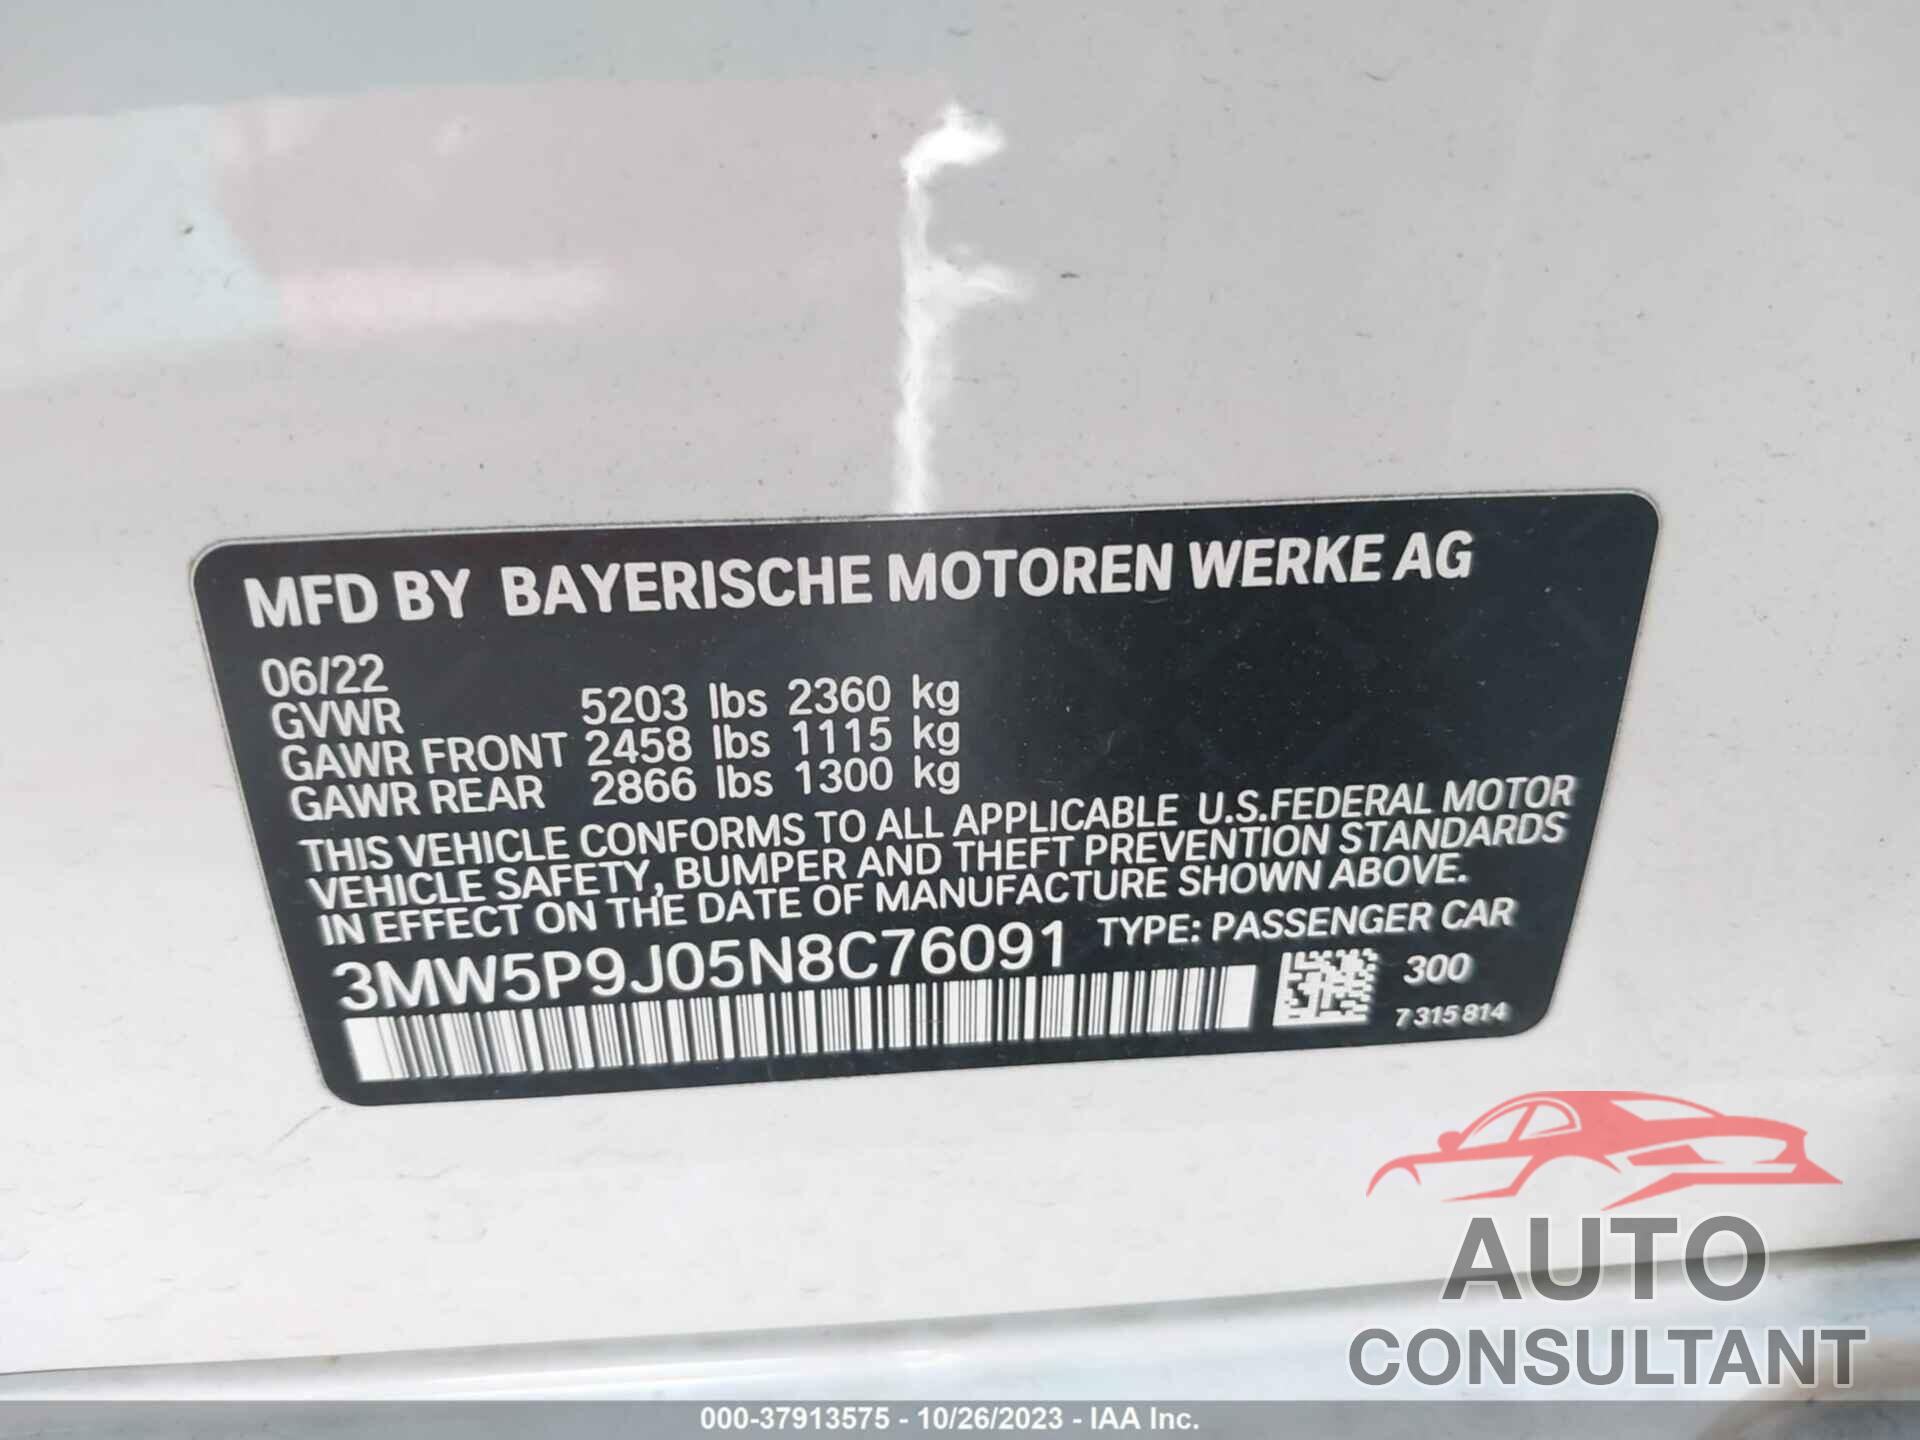 BMW 3 SERIES 2022 - 3MW5P9J05N8C76091